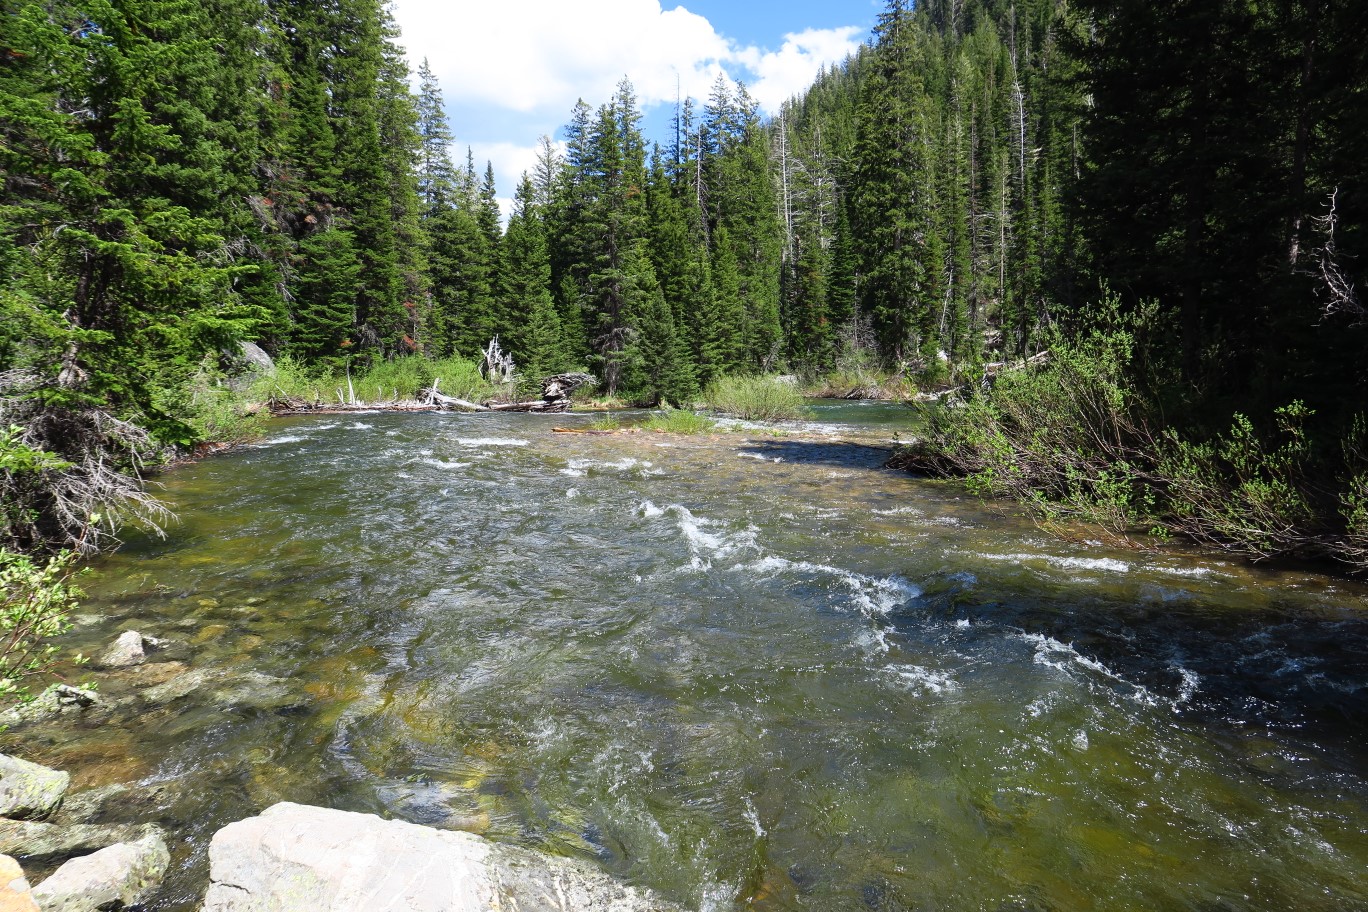 11-Cascade_Creek_downstream